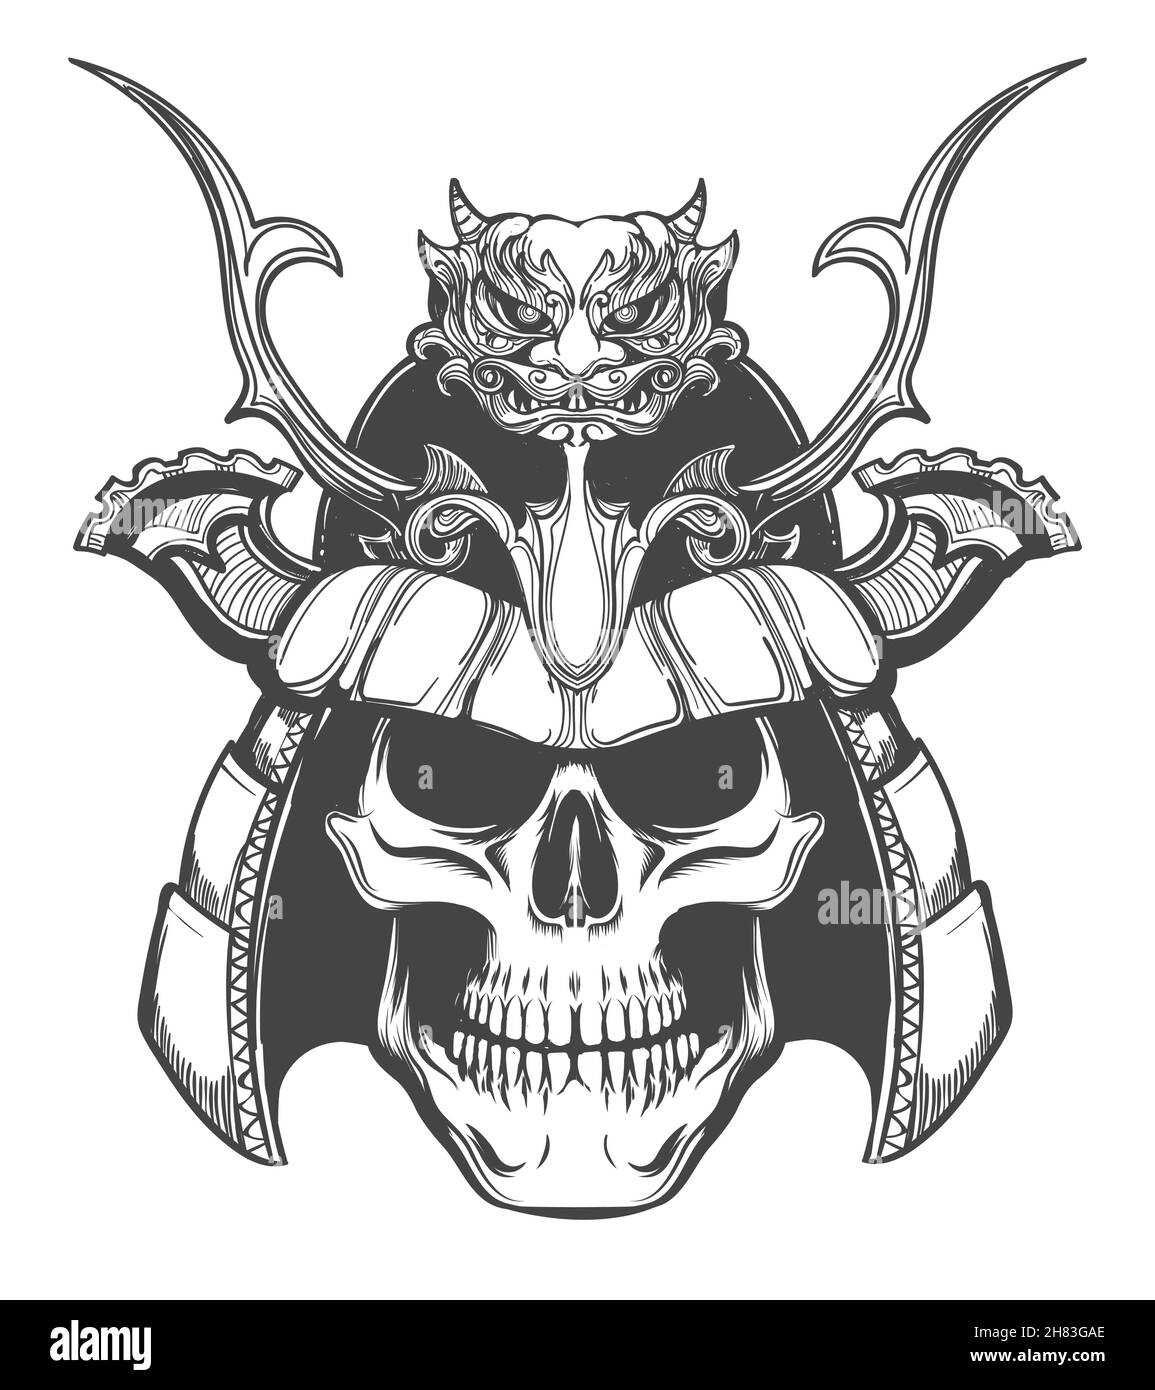 Tattoo of human skull in Japan Samurai Helmet isolated on white. Vector illustration. Stock Vector